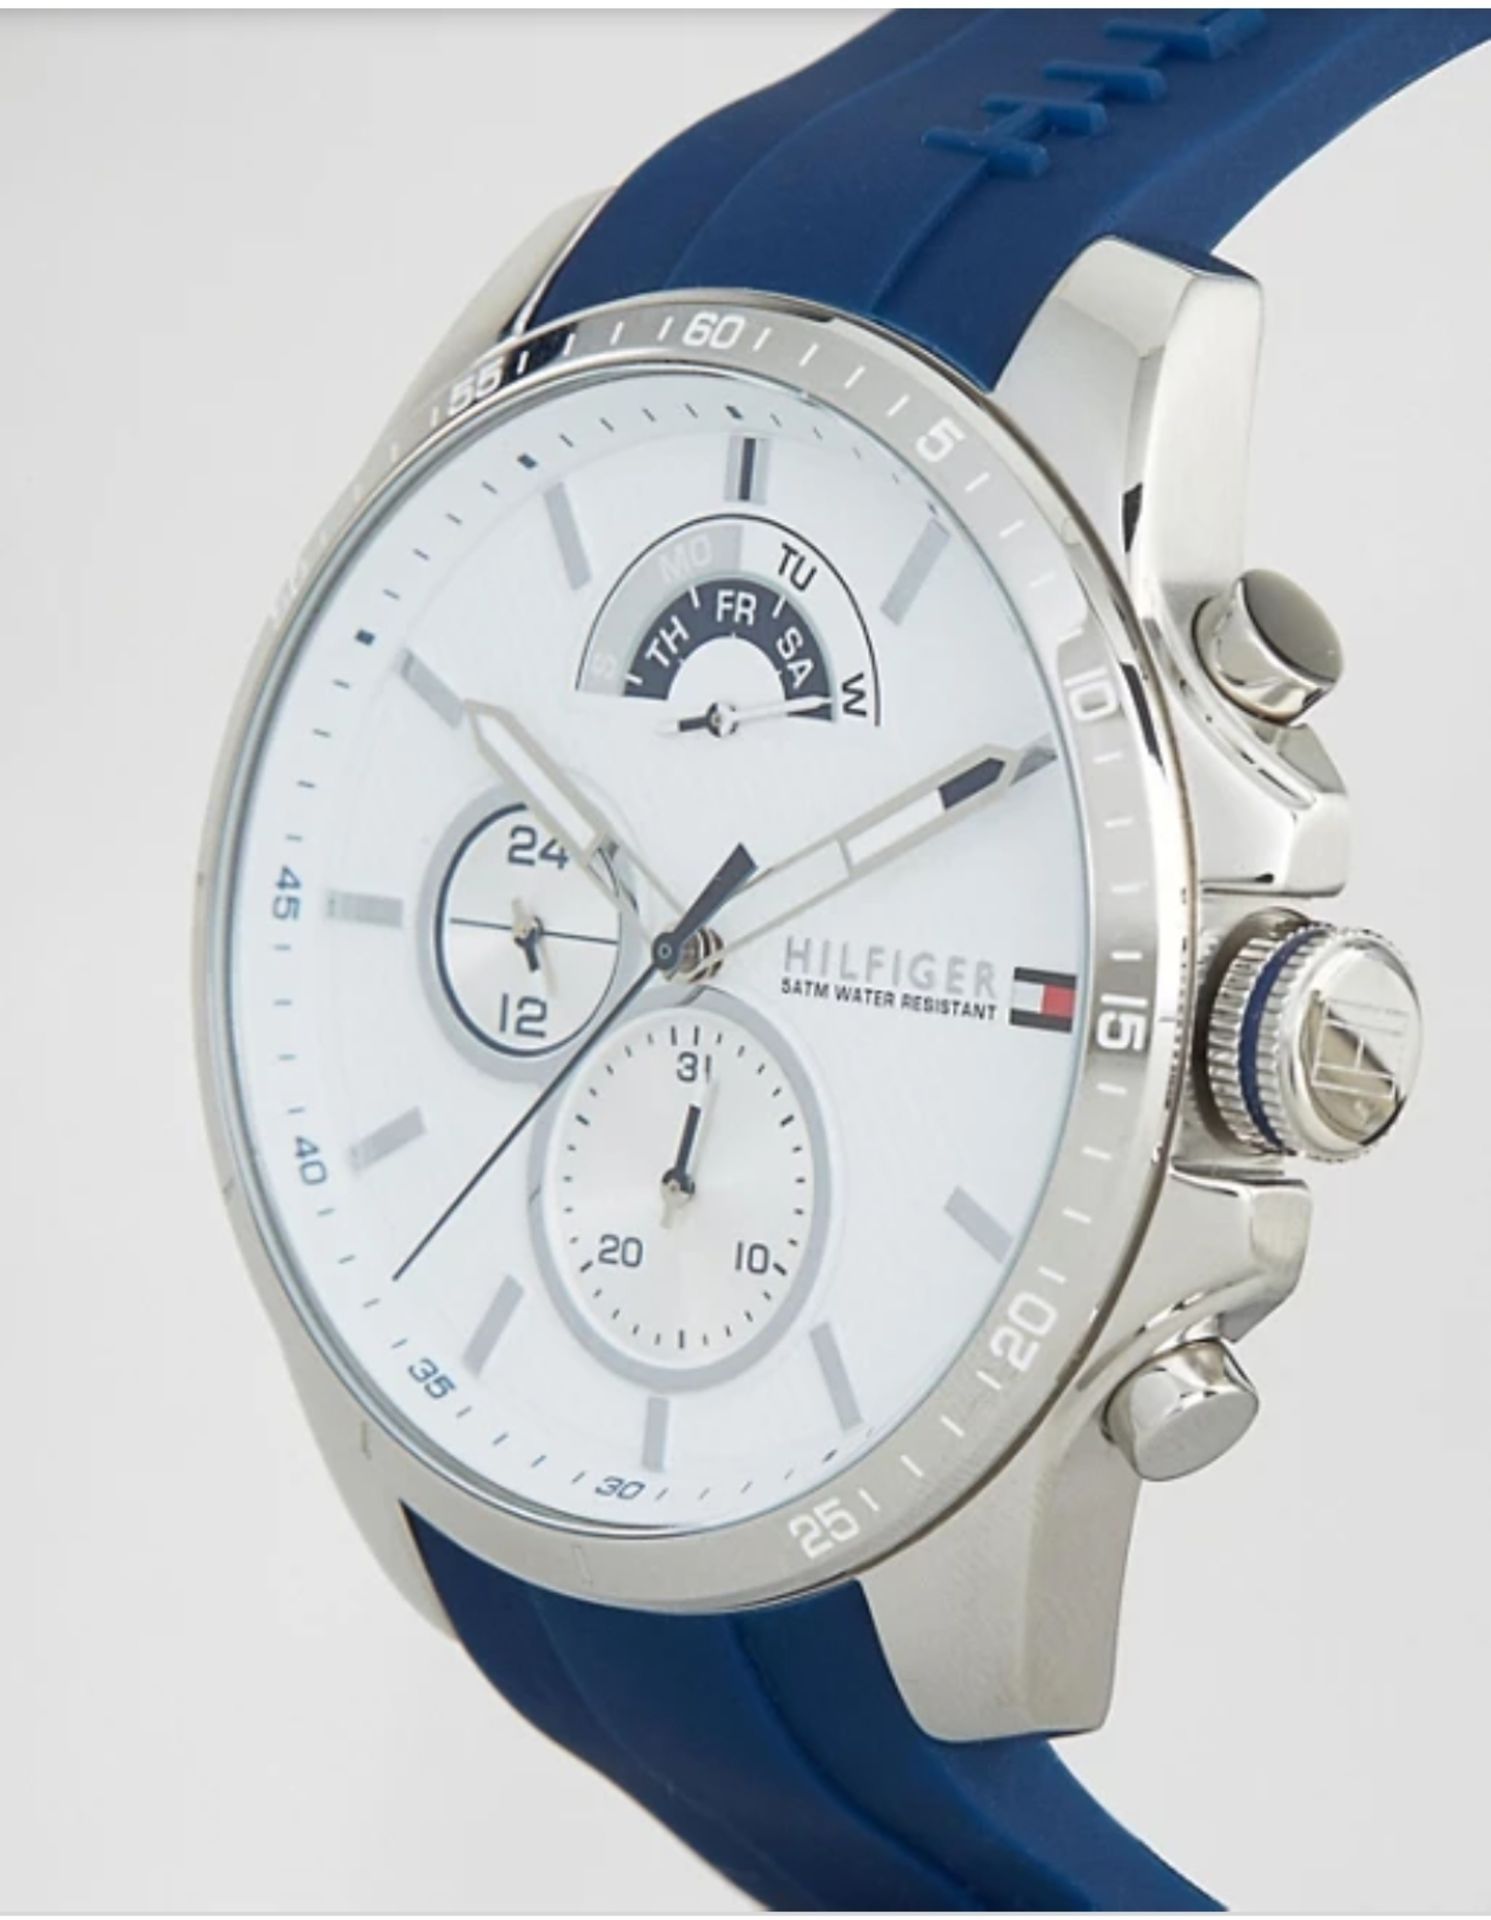 Tommy Hilfiger 1791349 Decker Blue Silicone Strap Quartz Chronograph Watch - Image 5 of 6